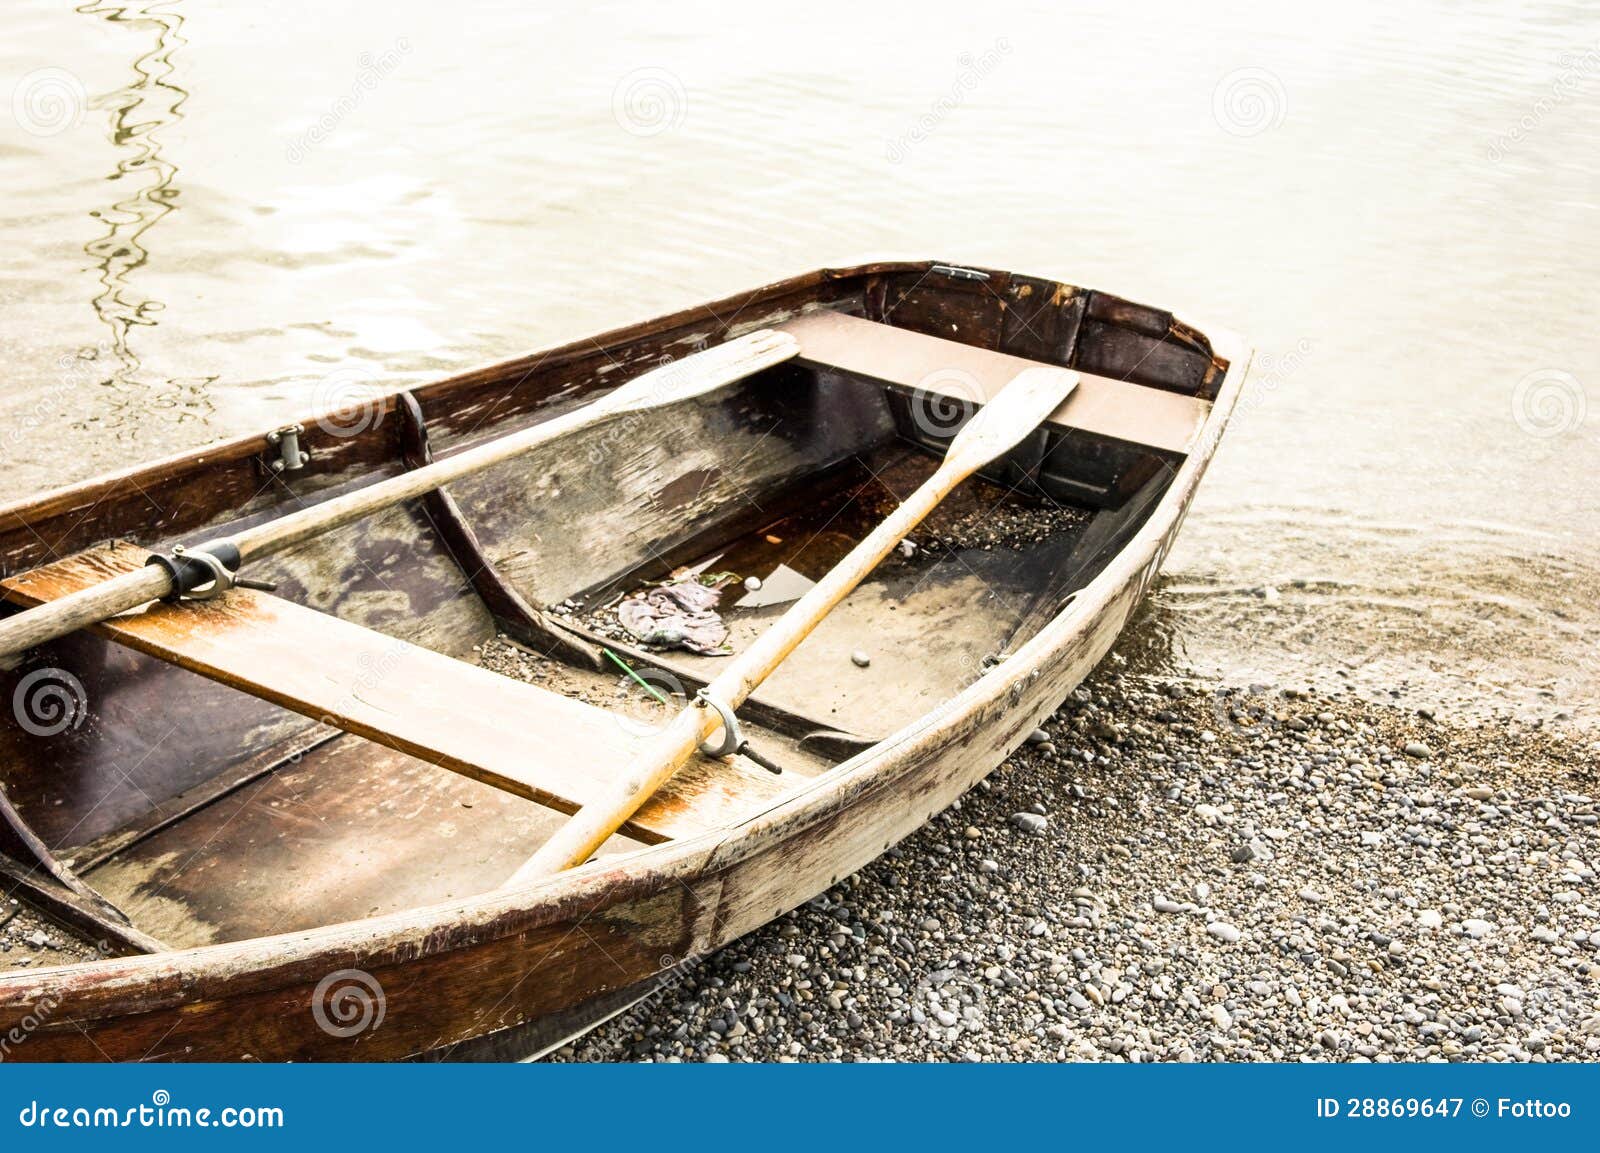 old rowboat royalty free stock photography - image: 28869647